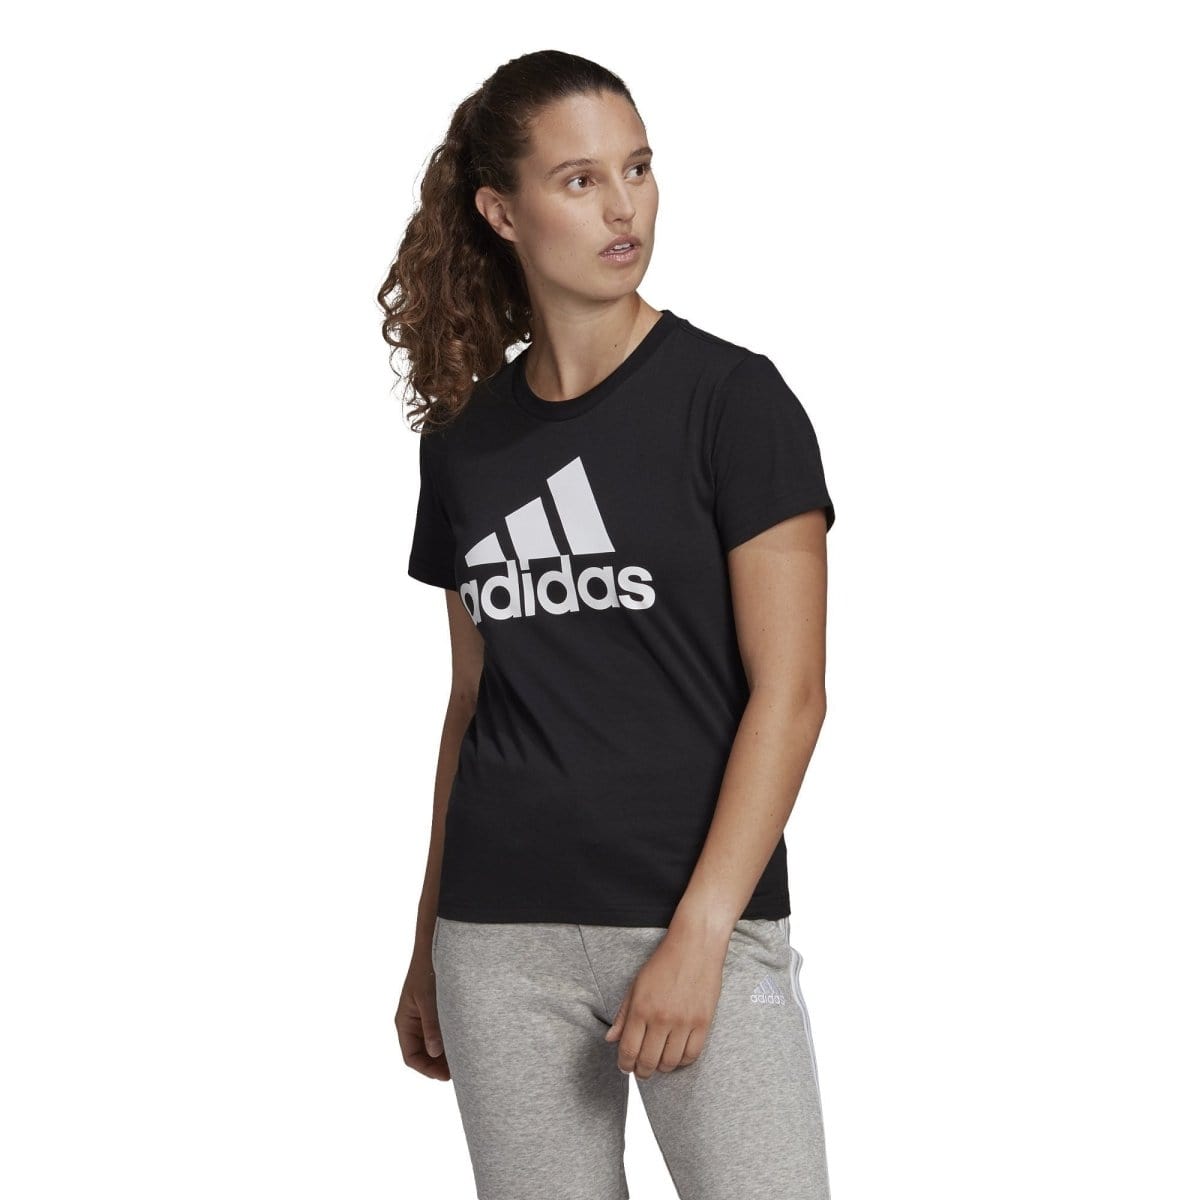 Adidas ADIDAS WOMEN'S LOUNGEWEAR ESSENTIALS LOGO BLACK TEE - INSPORT